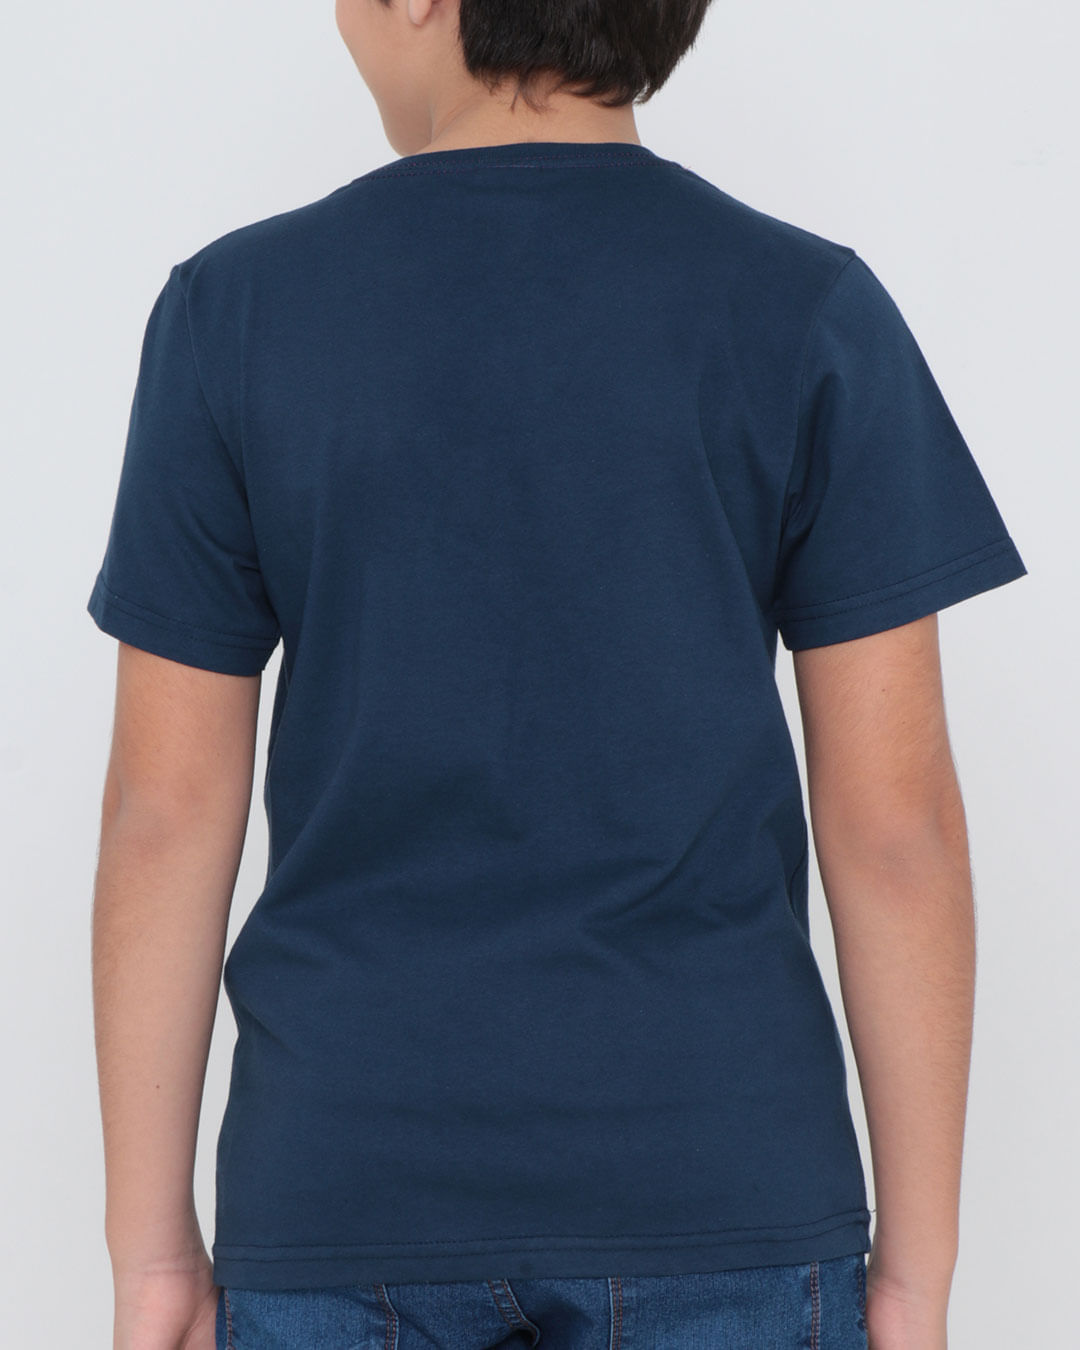 Camiseta-Juvenil-Estampa-Frontal-Skate-Azul-Marinho